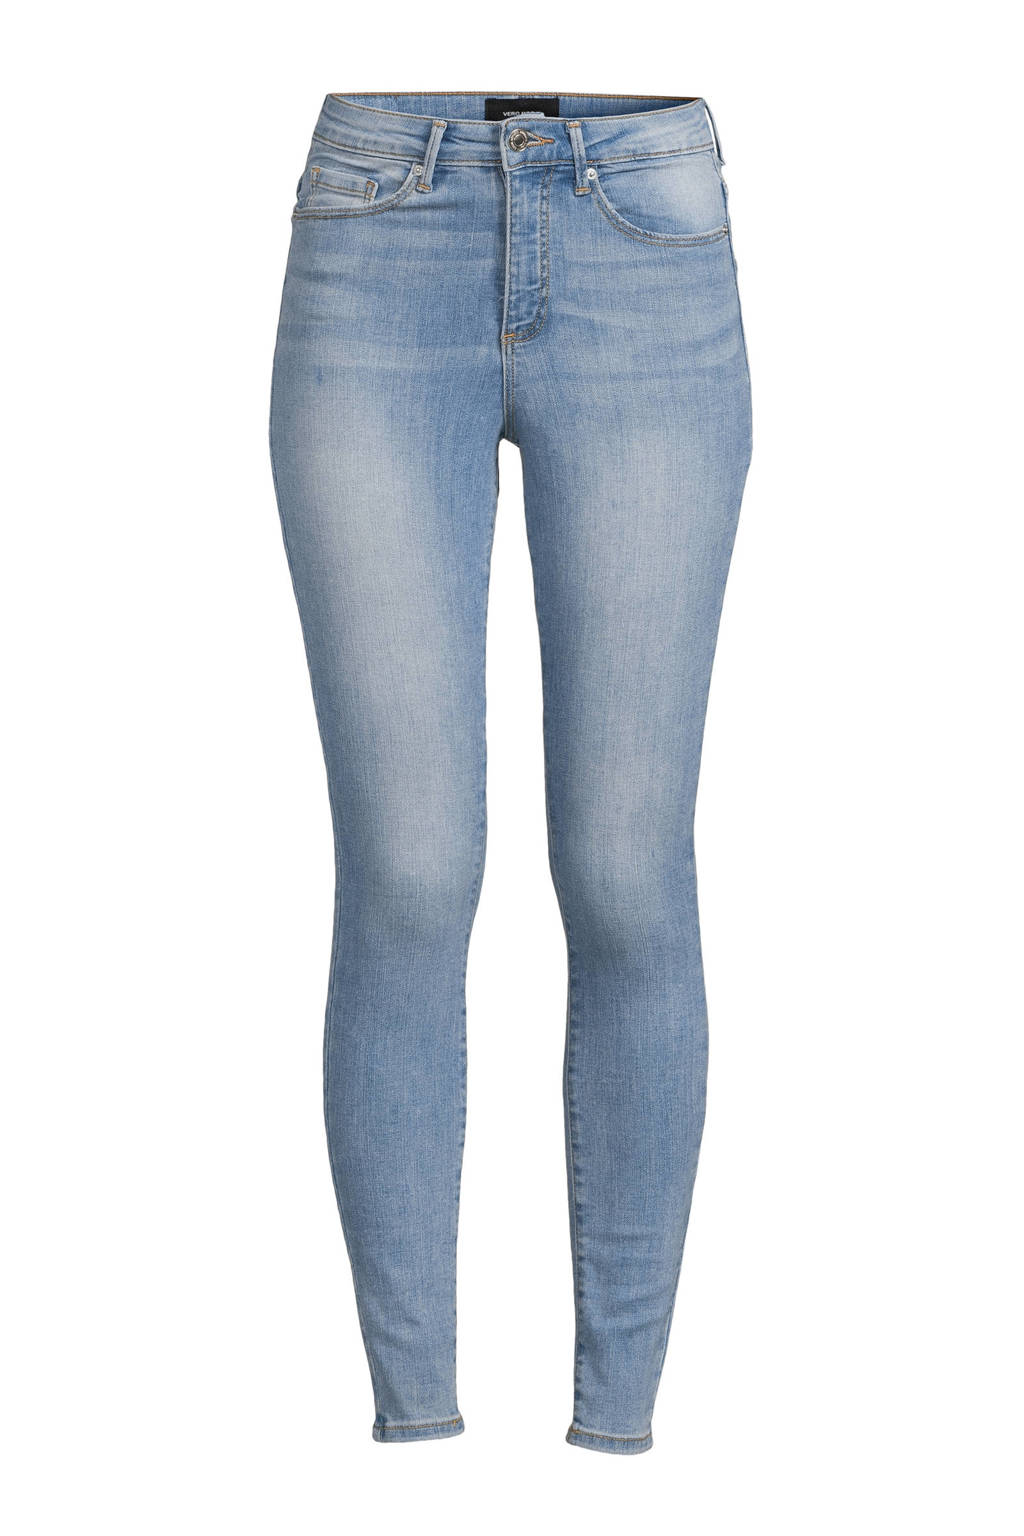 VERO MODA VMSOPHIA high jeans denim wehkamp skinny light | blue waist